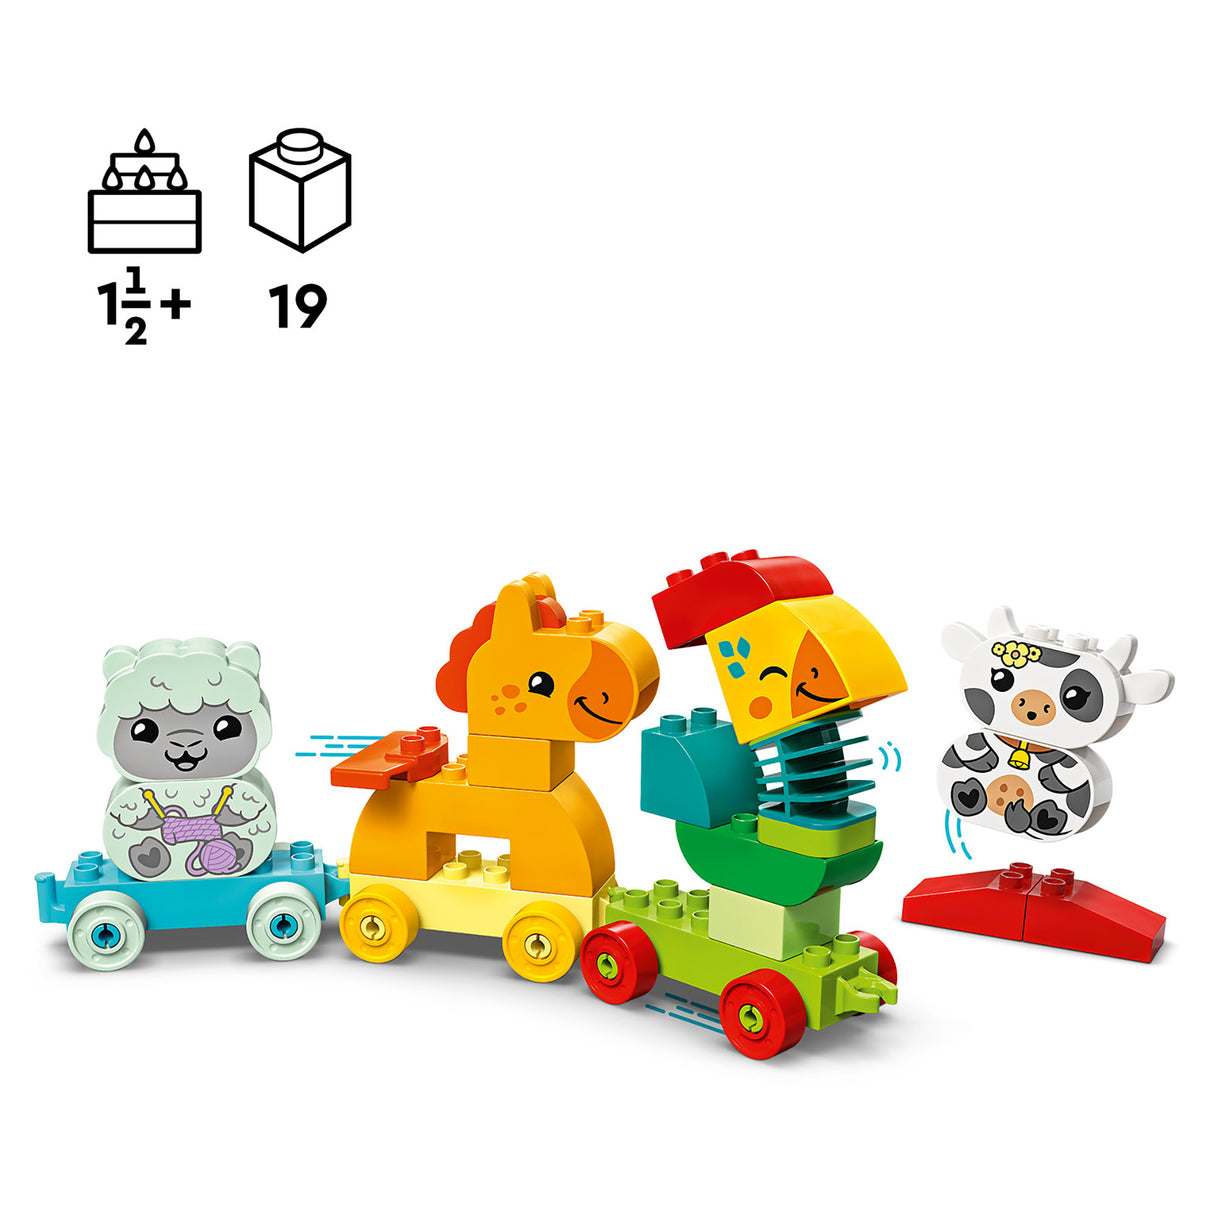 LEGO Duplo Animal Train 10412, (19-pieces)